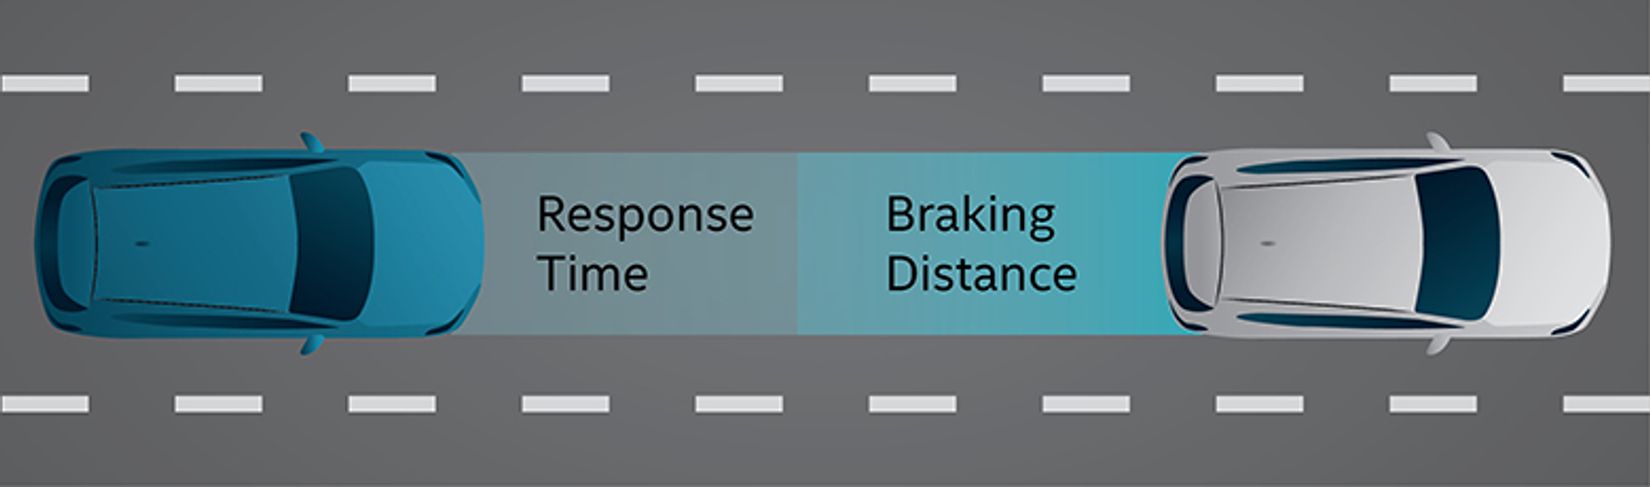 Response time vs. braking distance